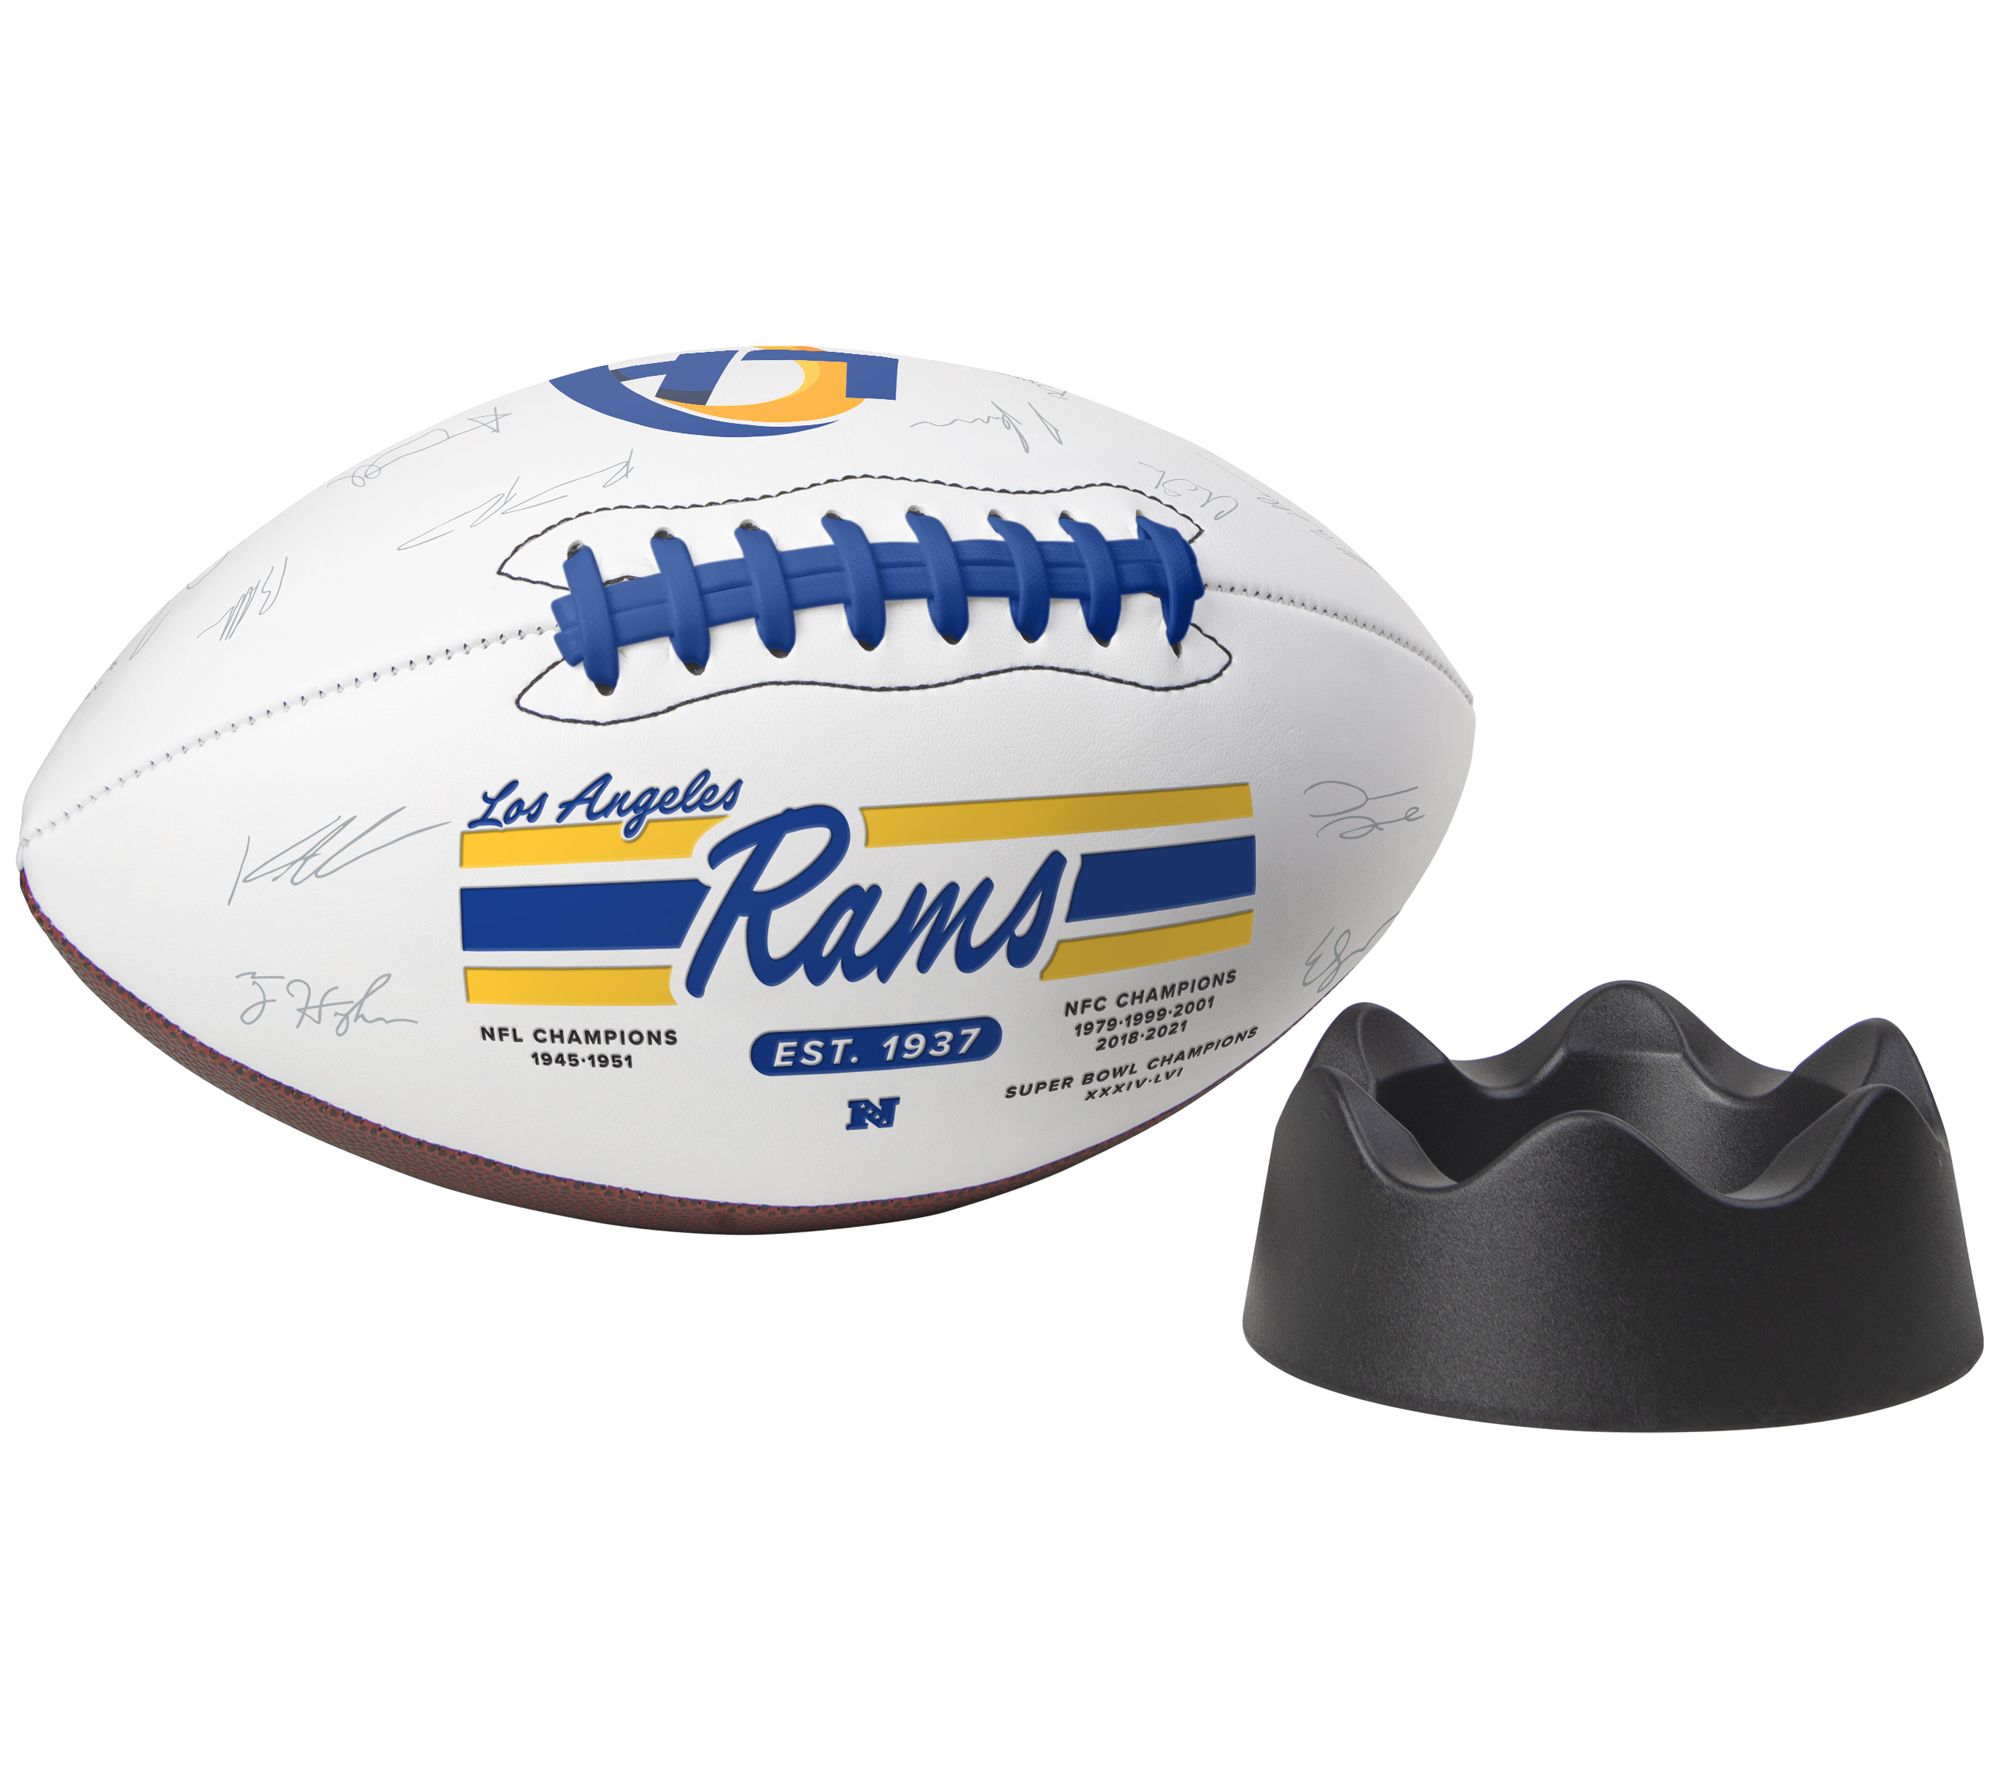 Lids Los Angeles Rams Team 16oz. Ceramic Mug Gift Set